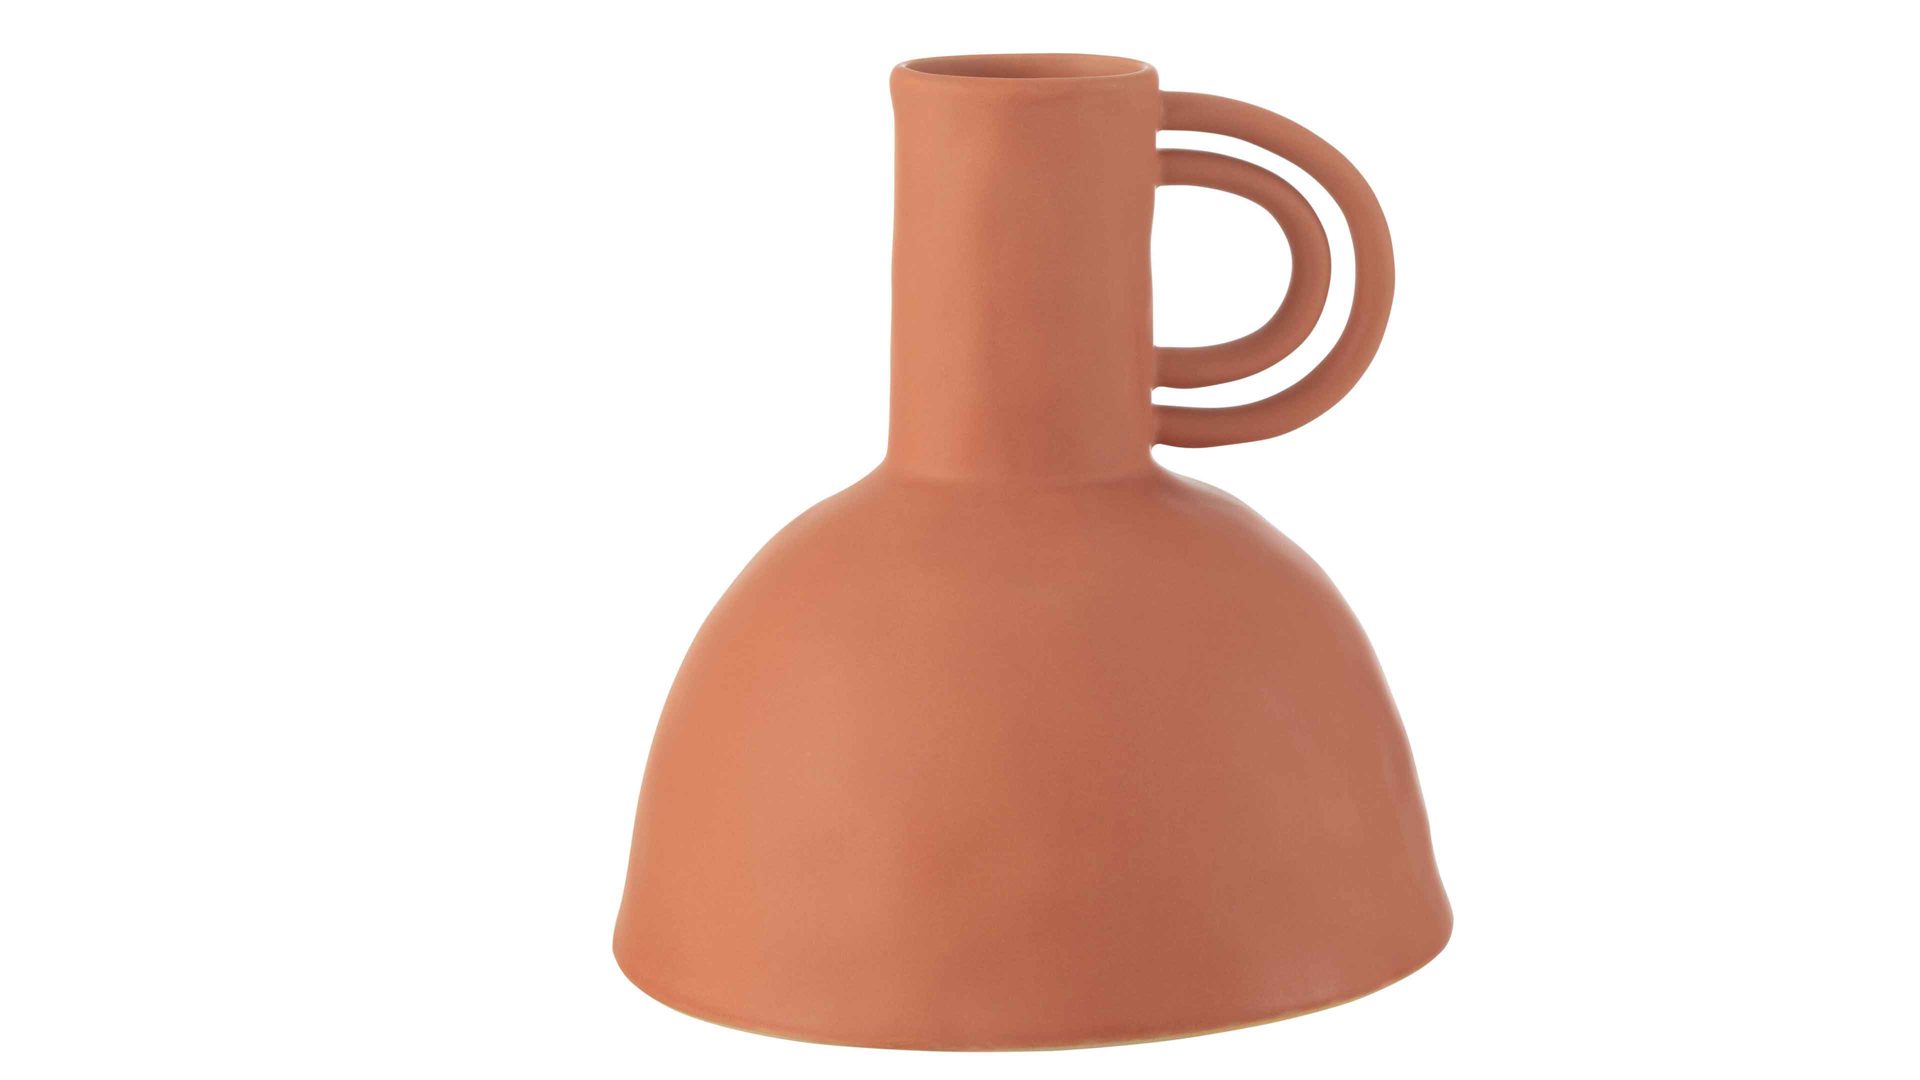 Vase Interliving BEST BUDDYS! aus Keramik in Orange Interliving BEST BUDDYS! Vase Renaissance orangefarbene Keramik - Höhe ca. 26 cm